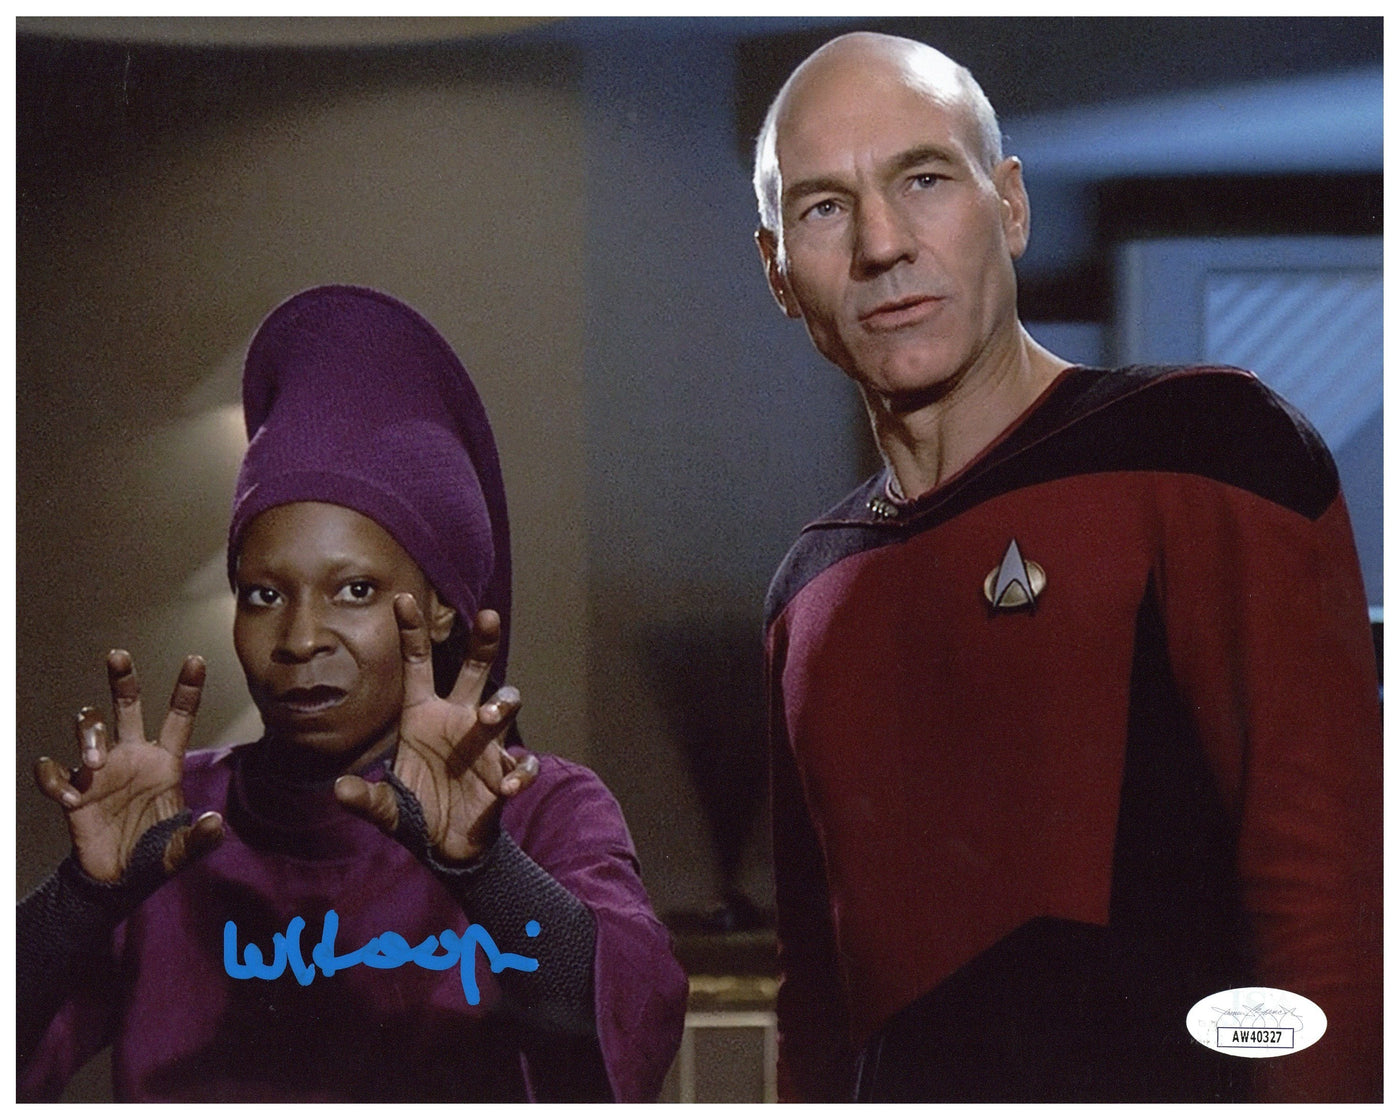 Whoopi Goldberg Signed 8x10 Photograph Star Trek Autographed JSA COA #2